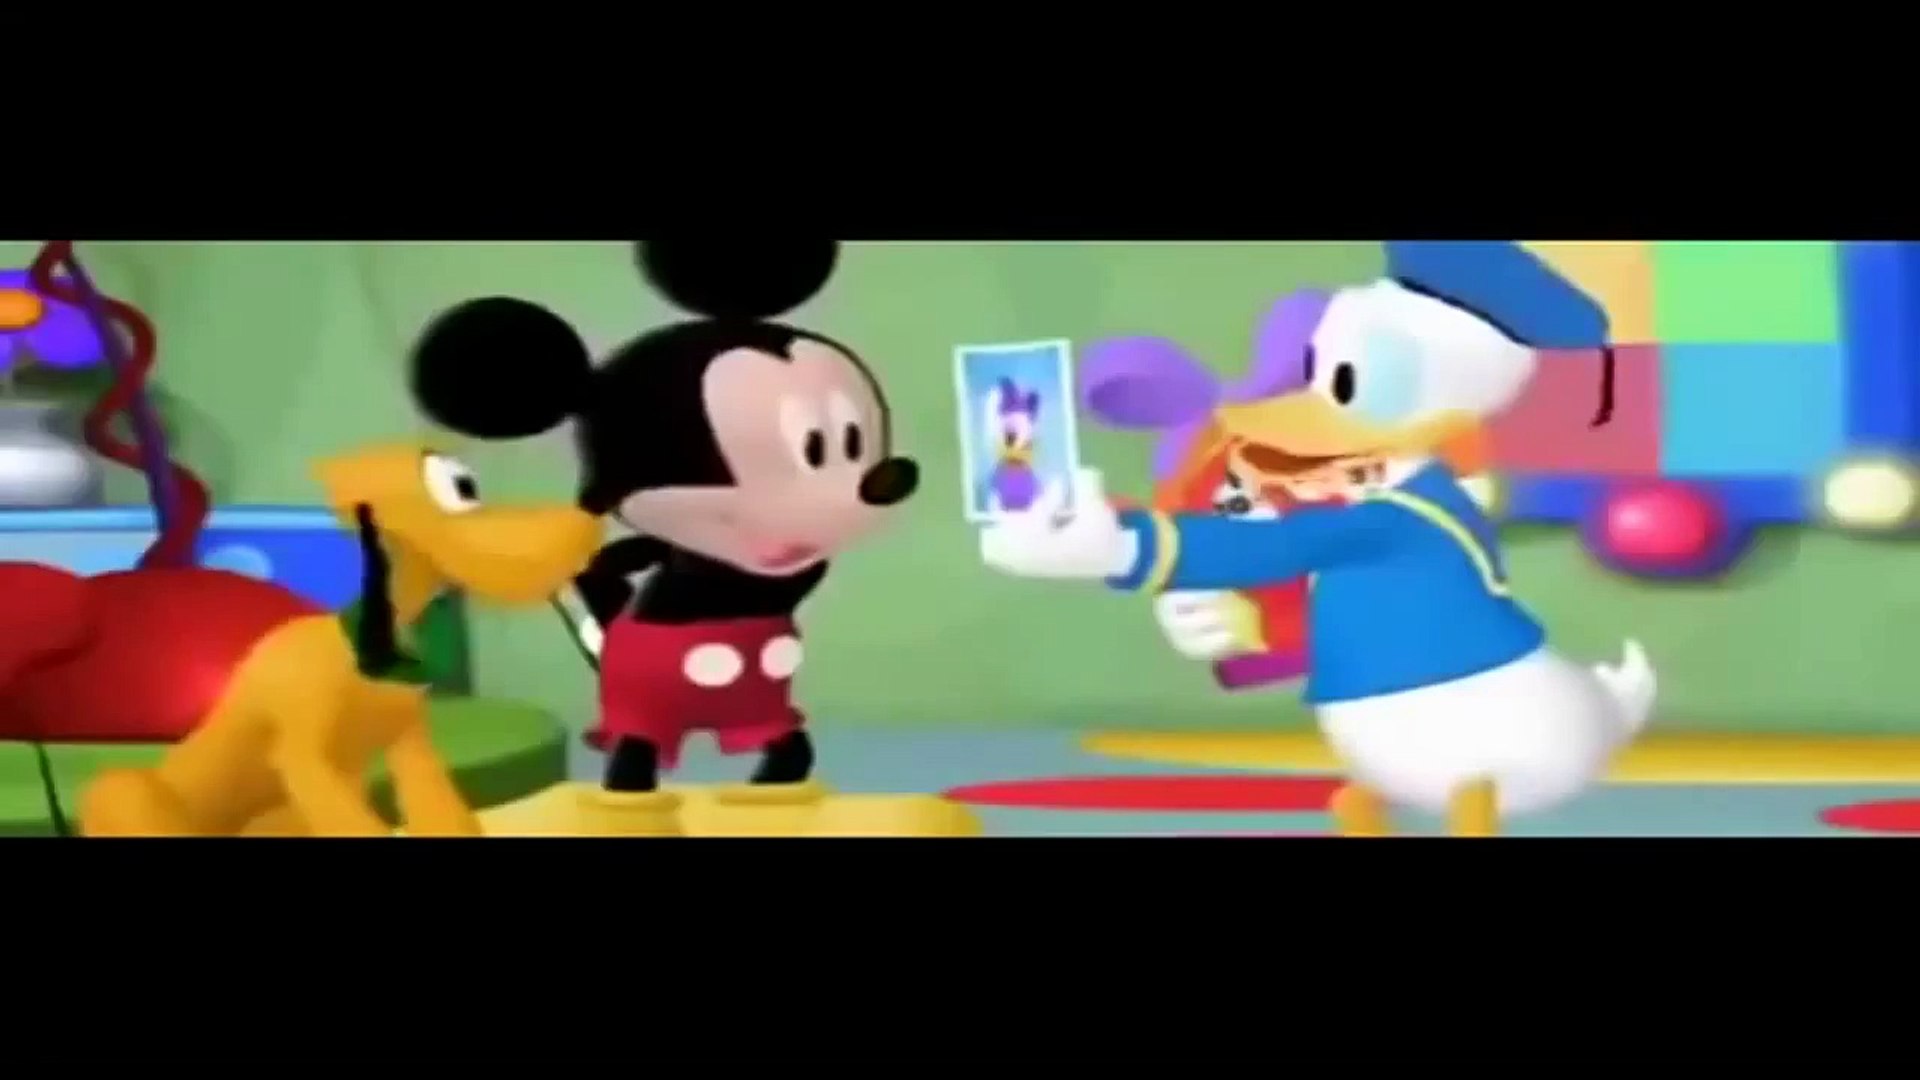 Mickey mouse - noël